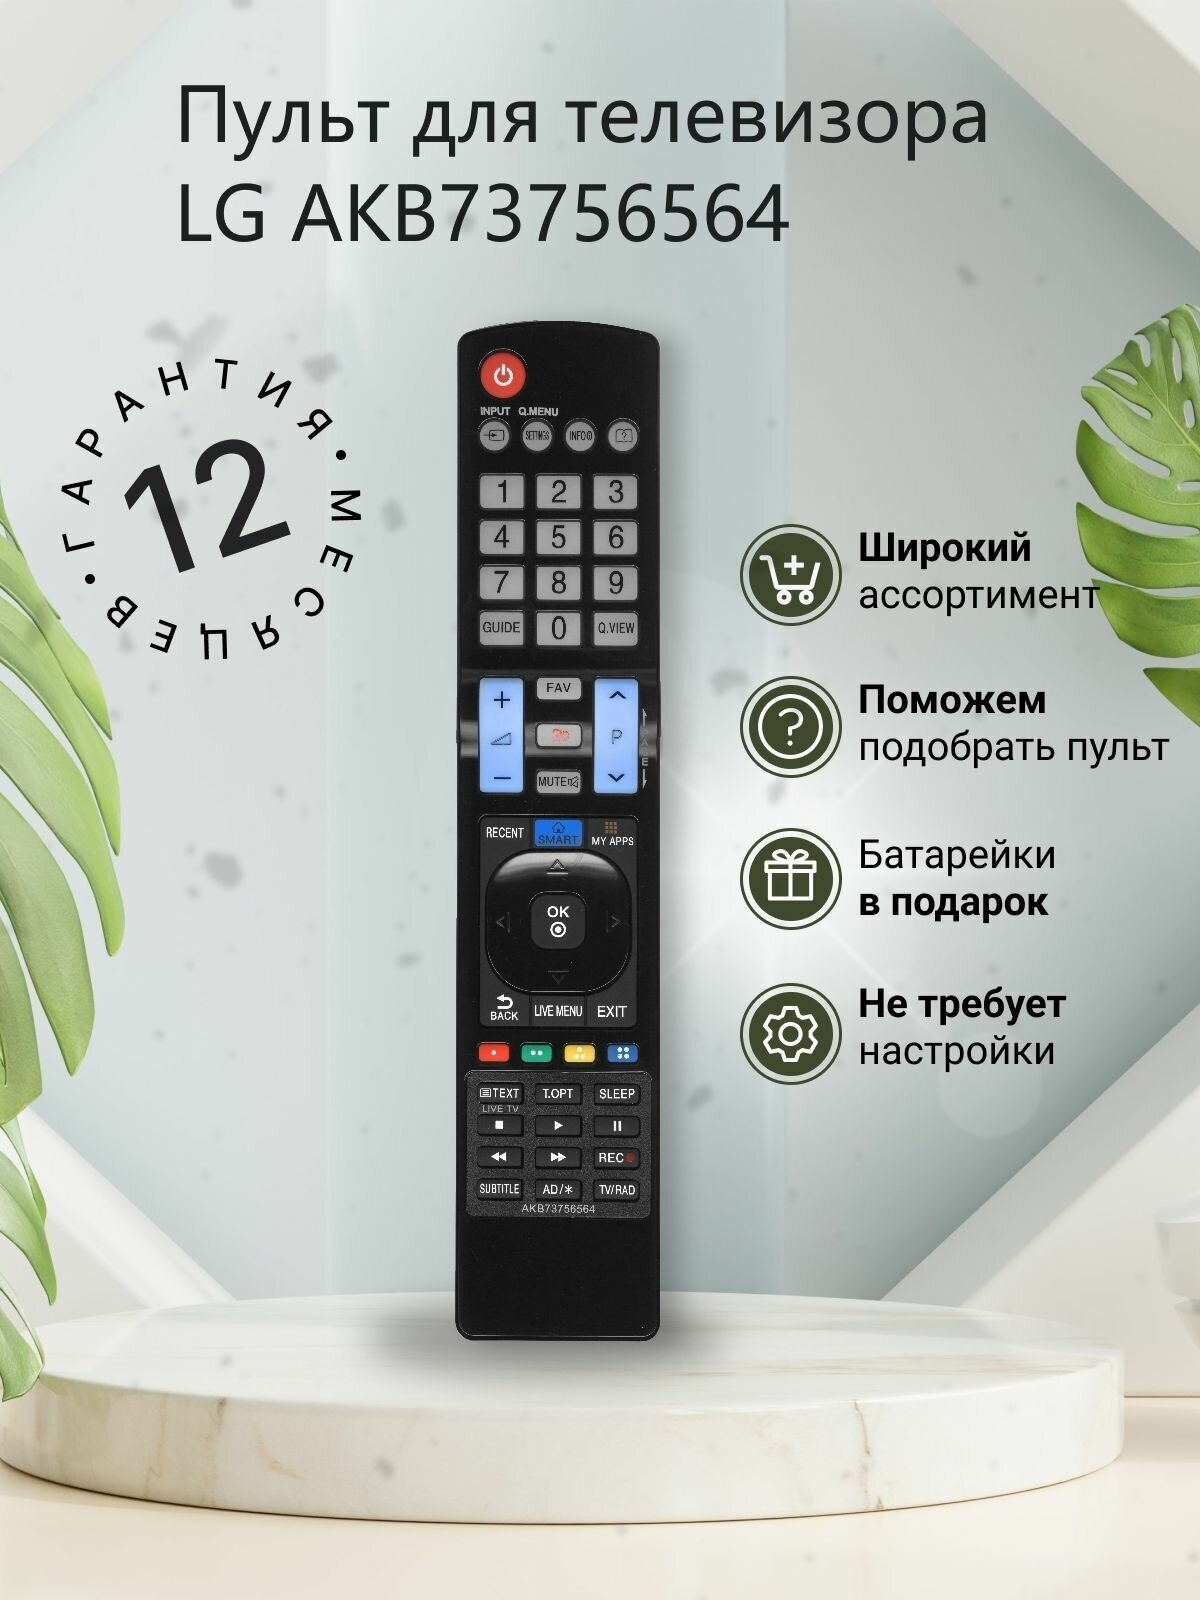 Пульт для телевизора LG AKB73756565, AKB73756564, AKB73756593